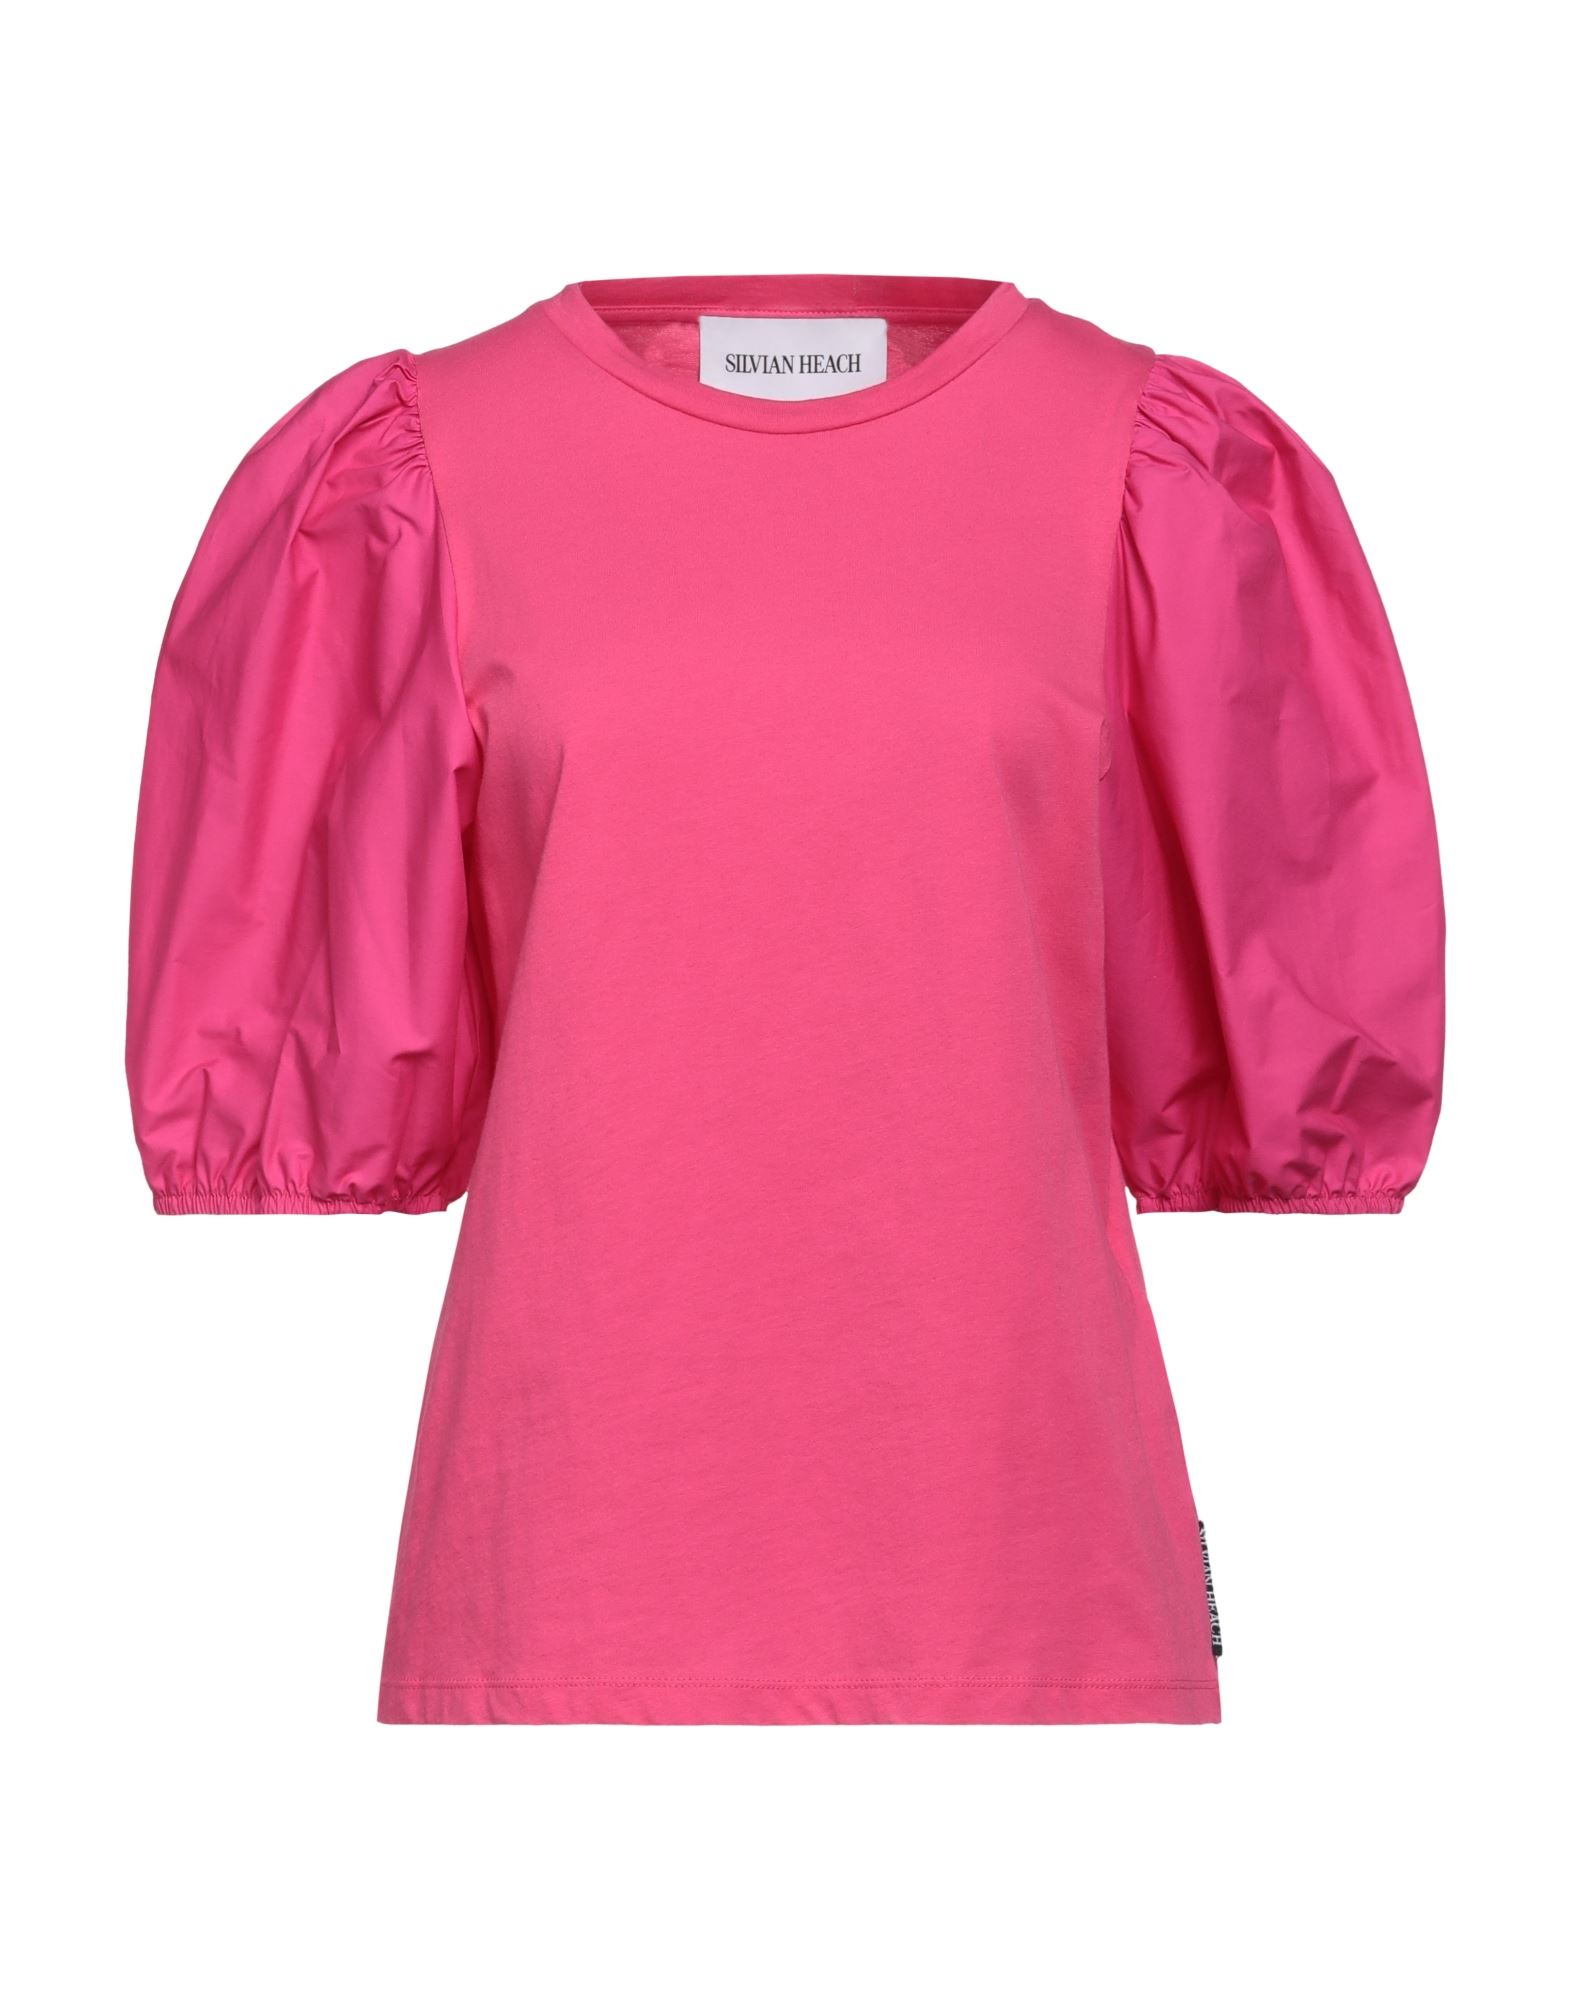 Silvian Heach T-shirts In Pink